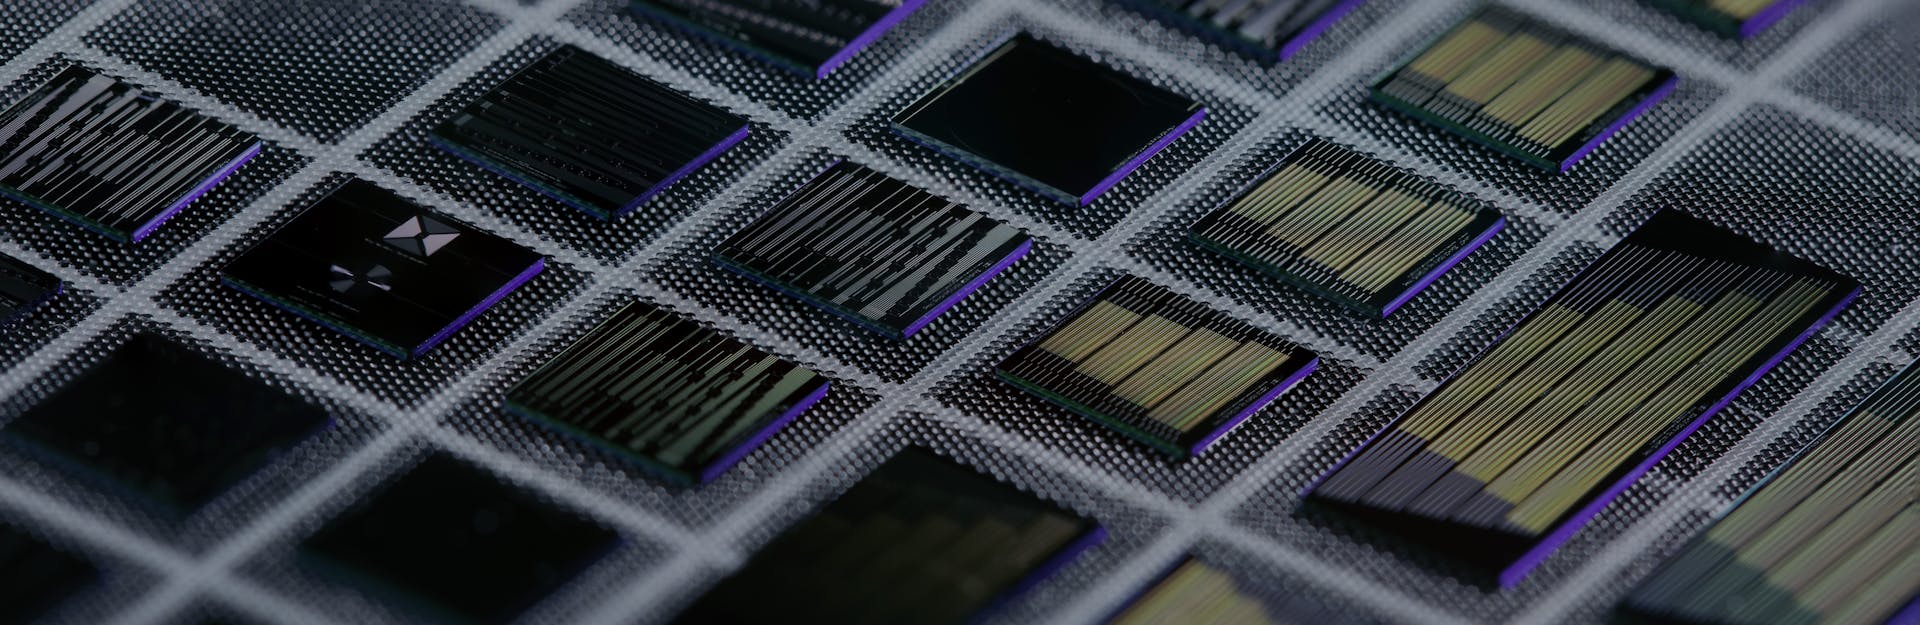 Multiple 5x5 mm² chips fabricated on CSEM's TFLN PIC platform.